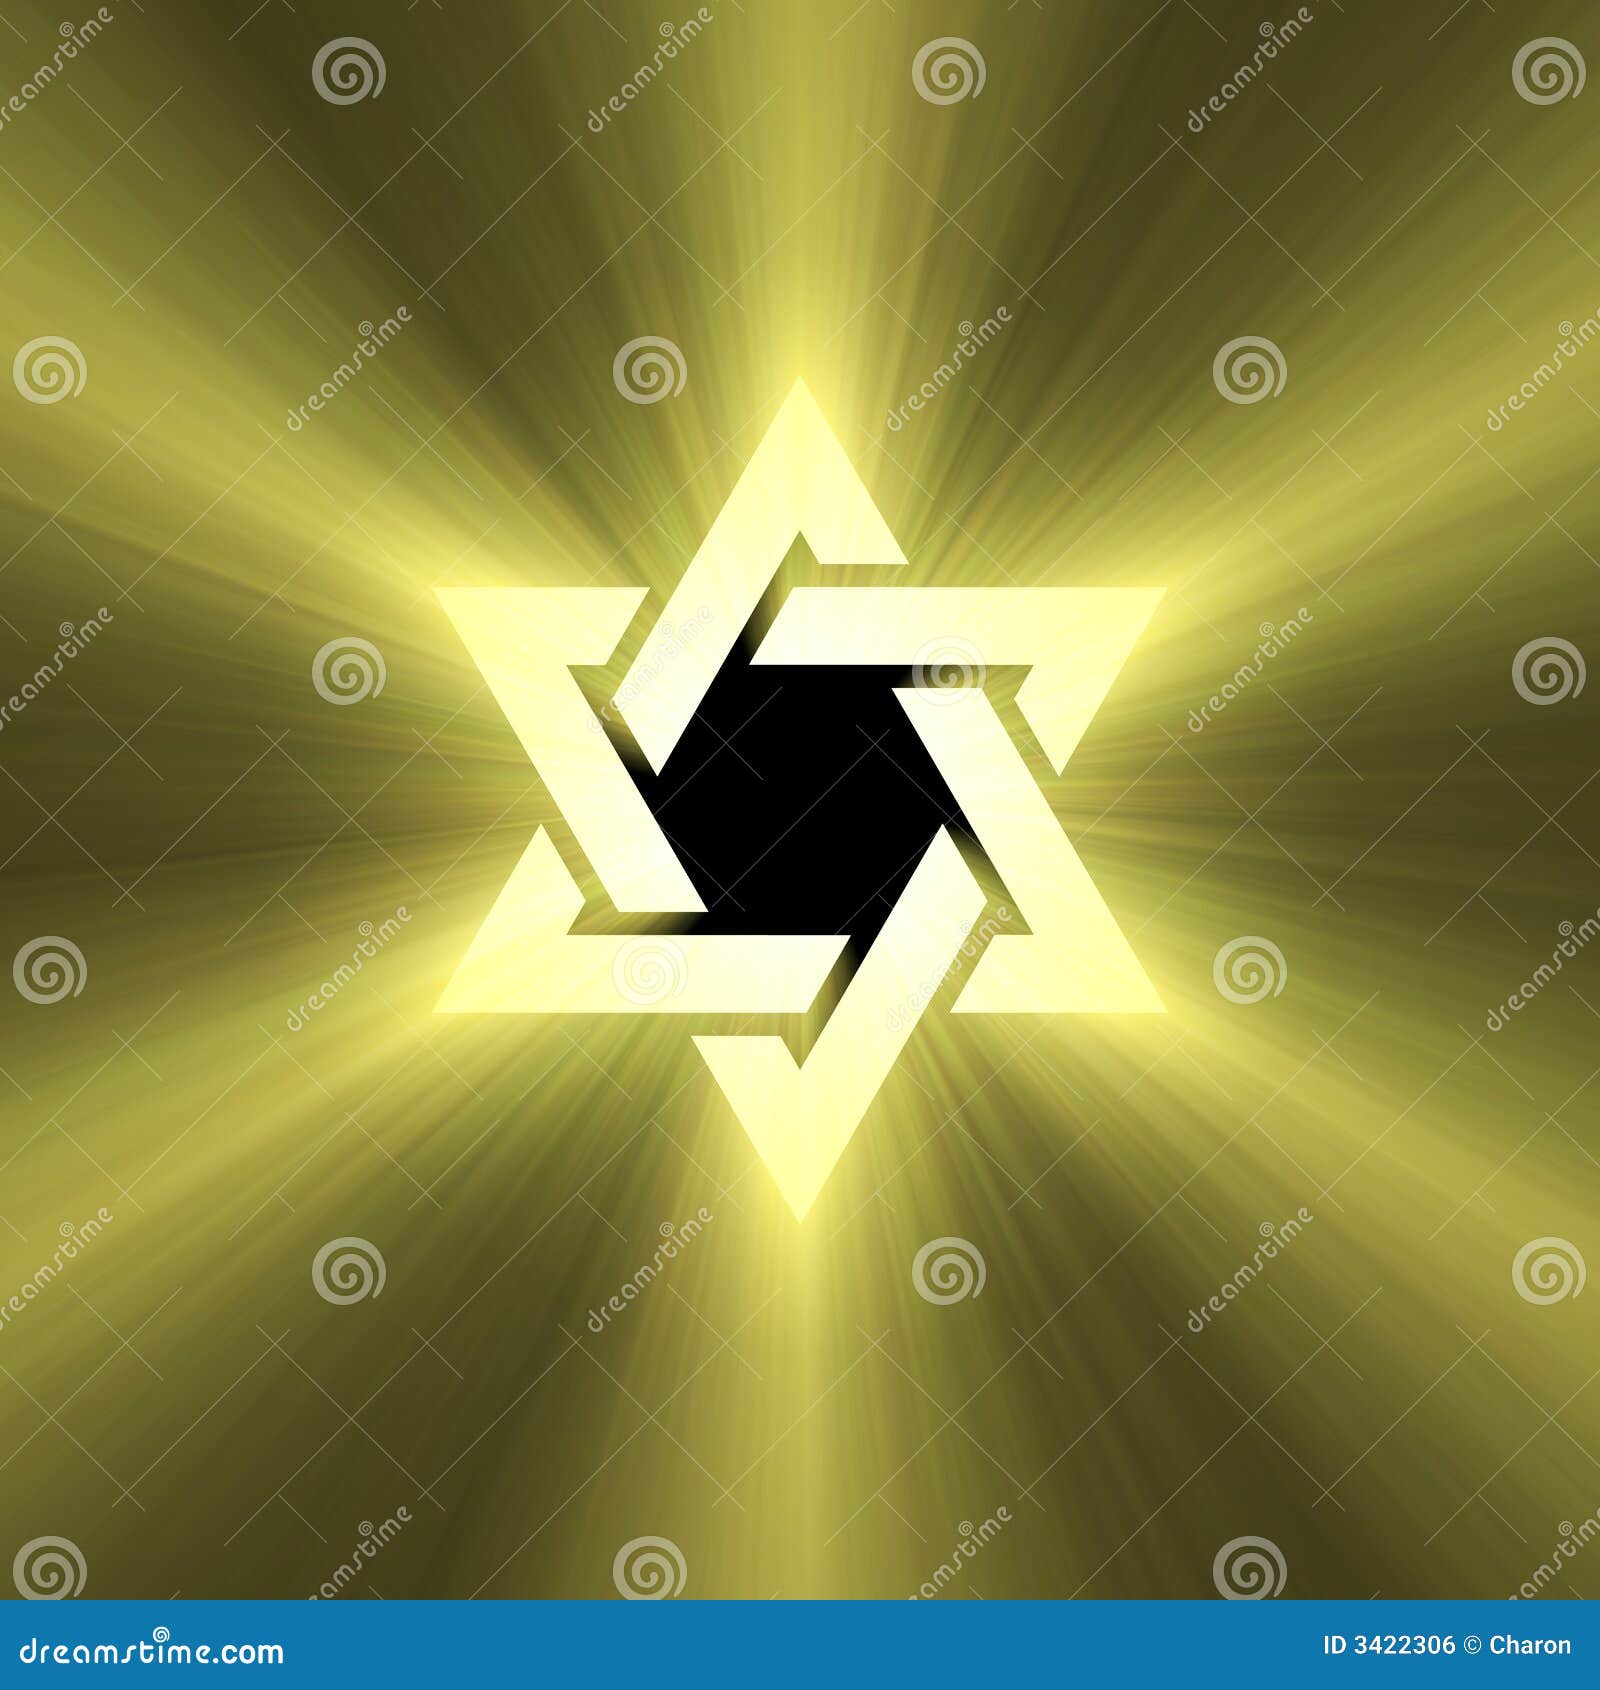 Star Of David Symbol Shine Light Flare Royalty Free Stock Image - Image